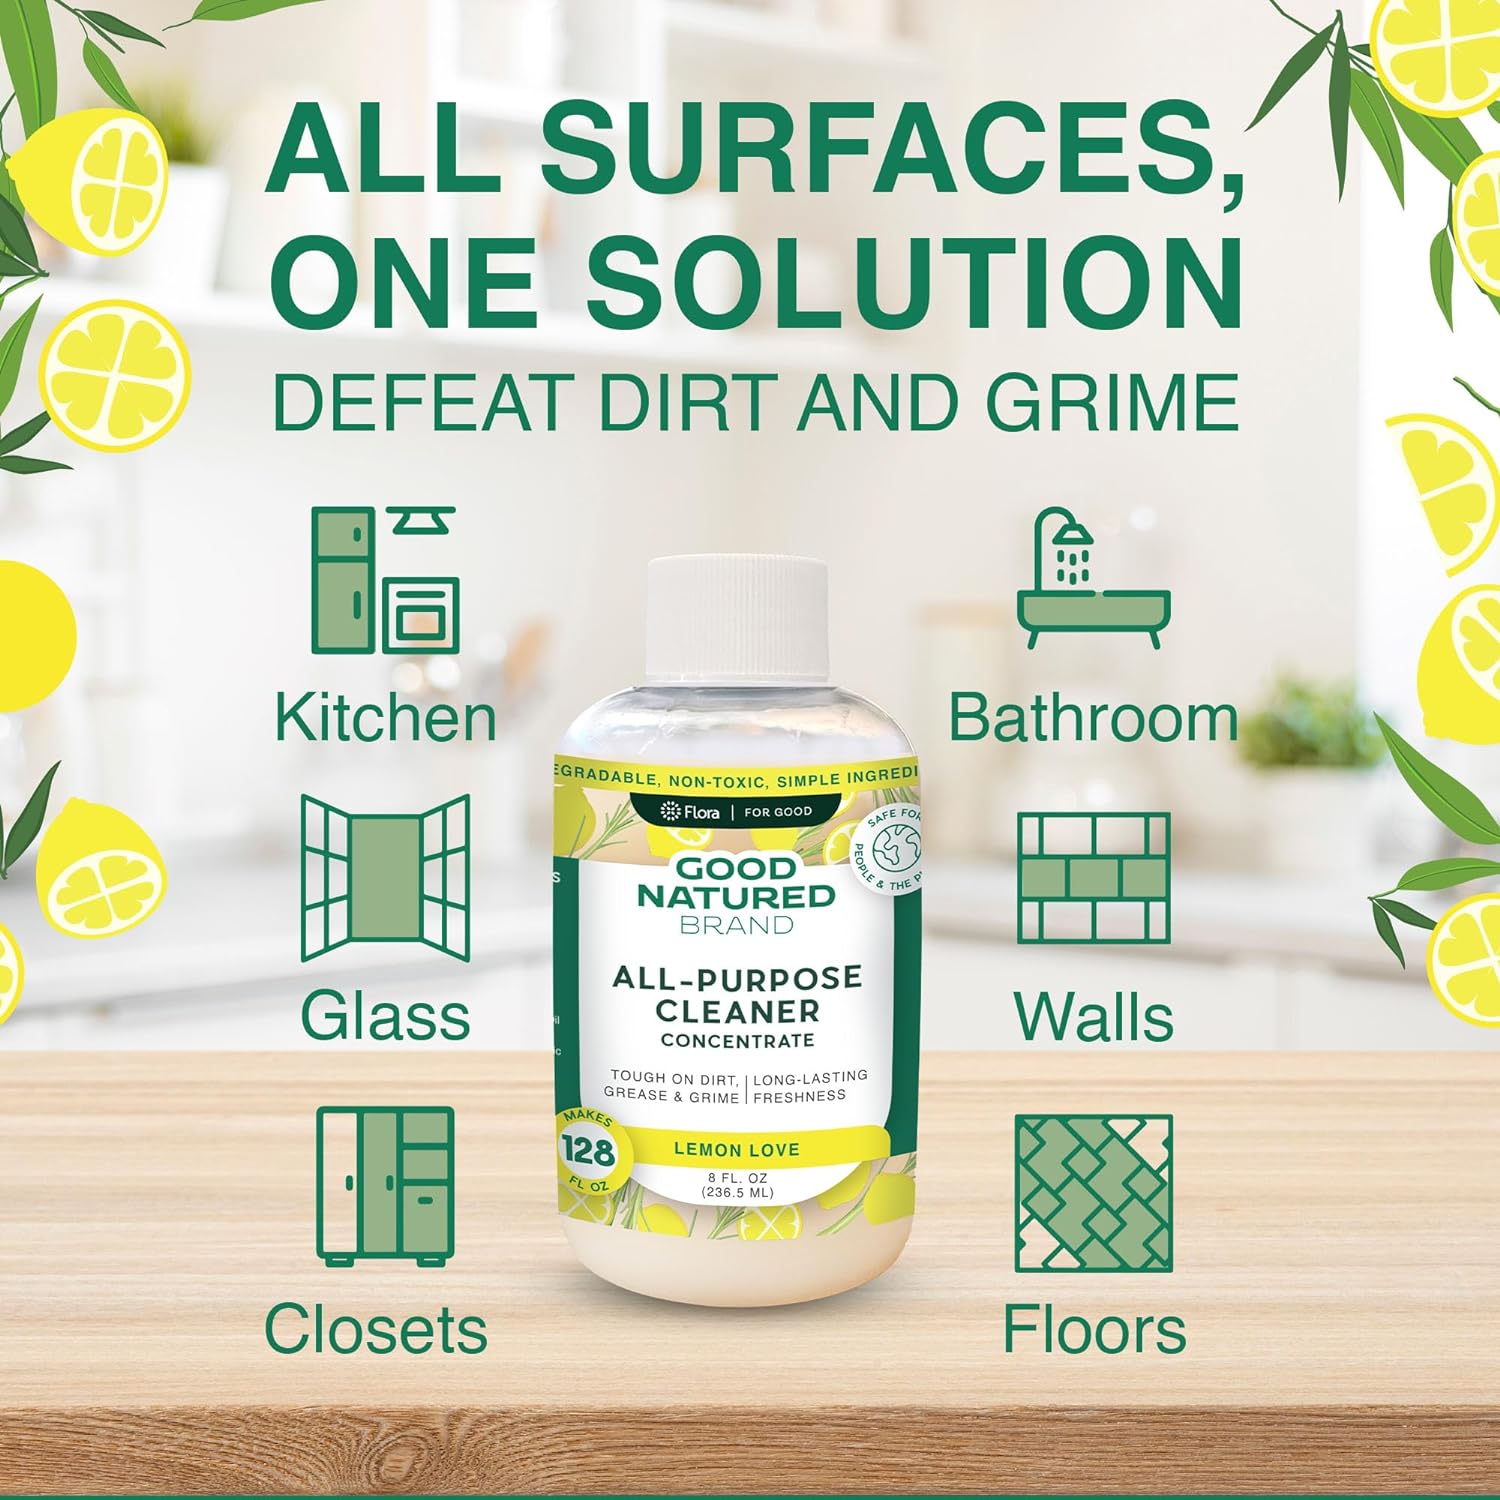 All-Purpose Cleaner Concentrate - Lemon Love | 8 fl oz makes 128 fl oz